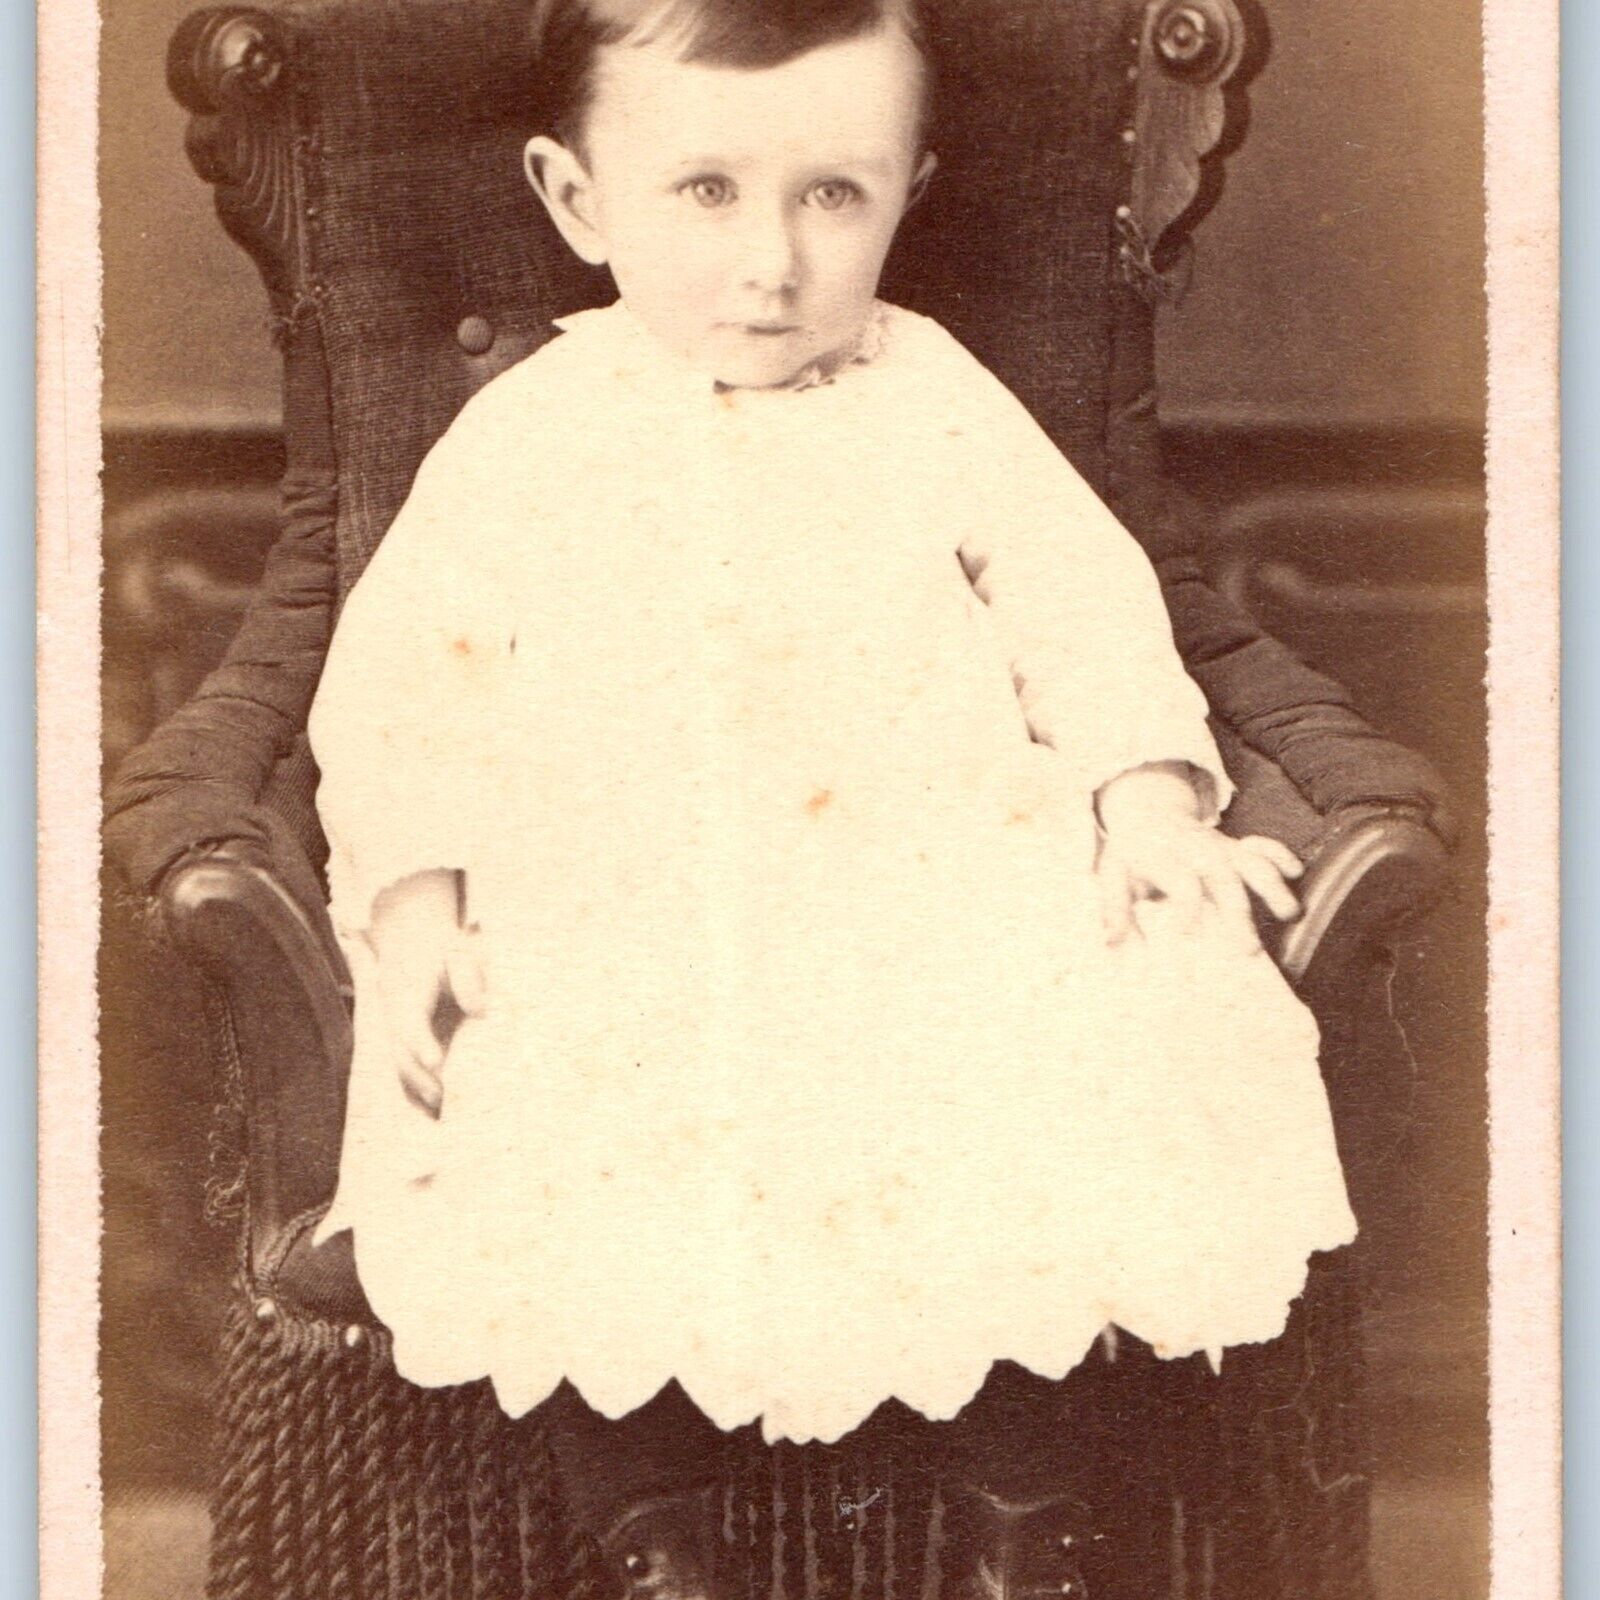 c1870s Cute Mousy Looking Little Boy Toddler Sharp CdV Photo Card Mini Chair H26